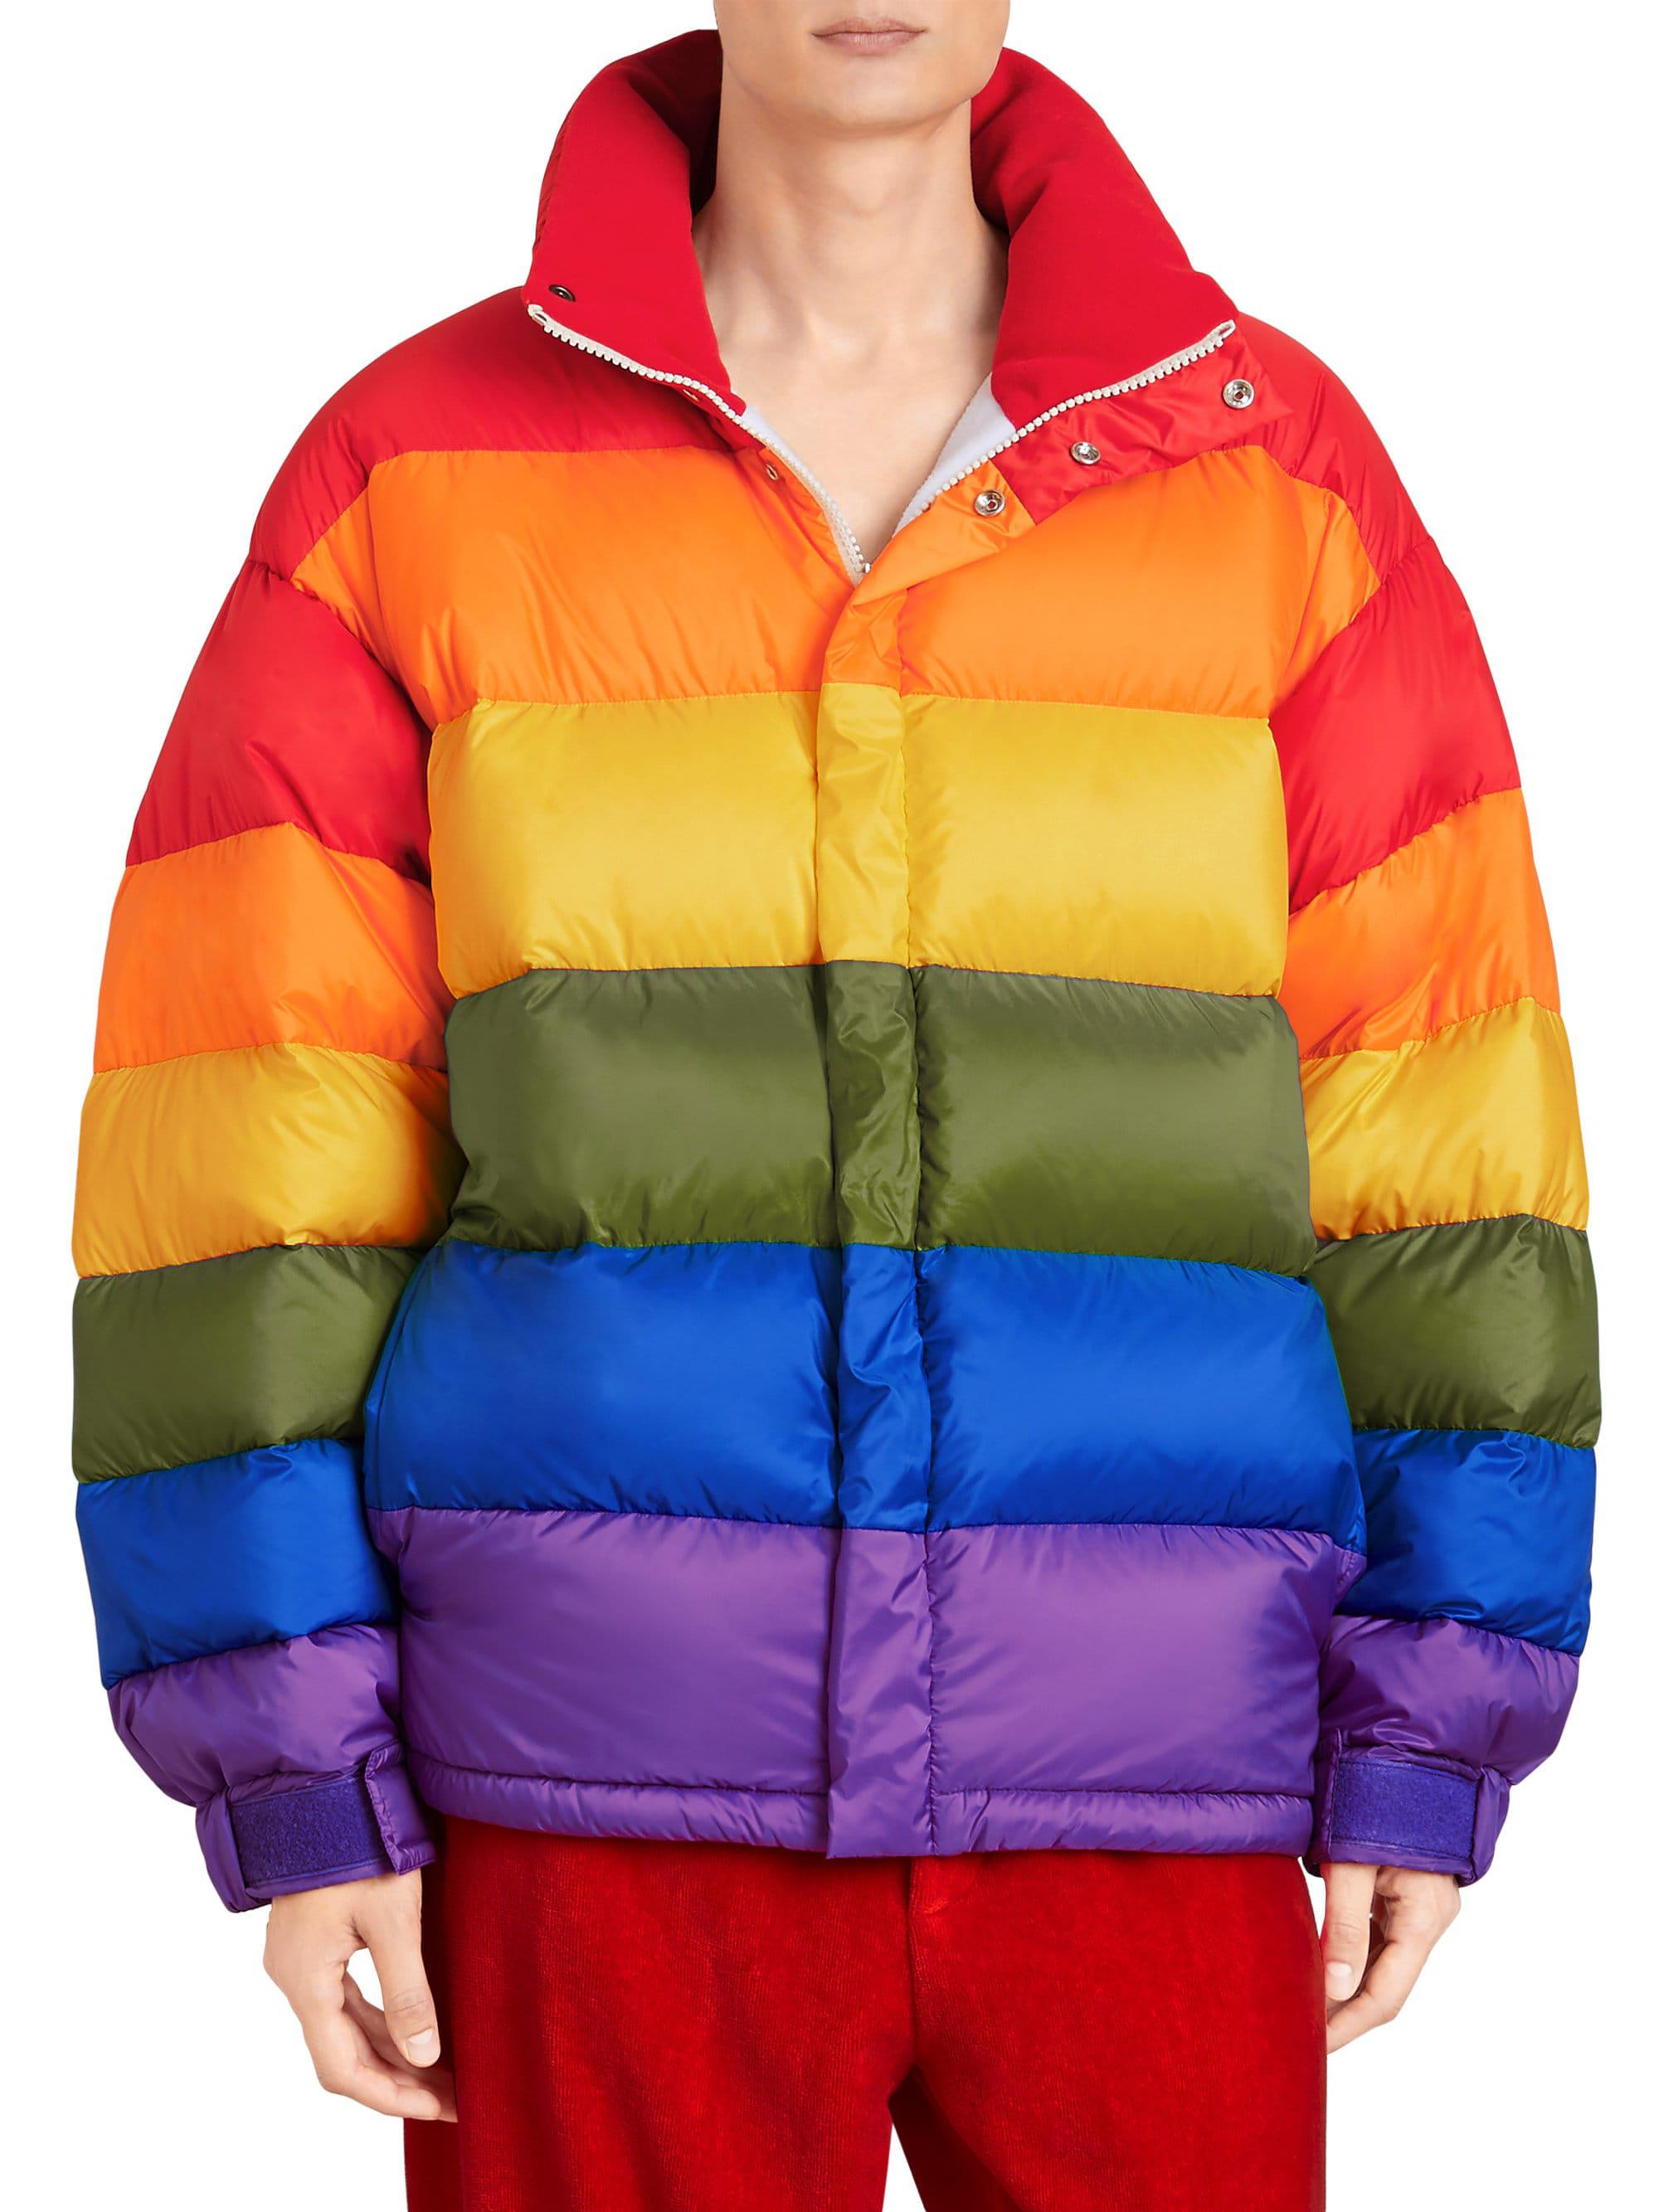 Al patrulea Auto penetrație rainbow puffer jacket - mariacastrojato.com